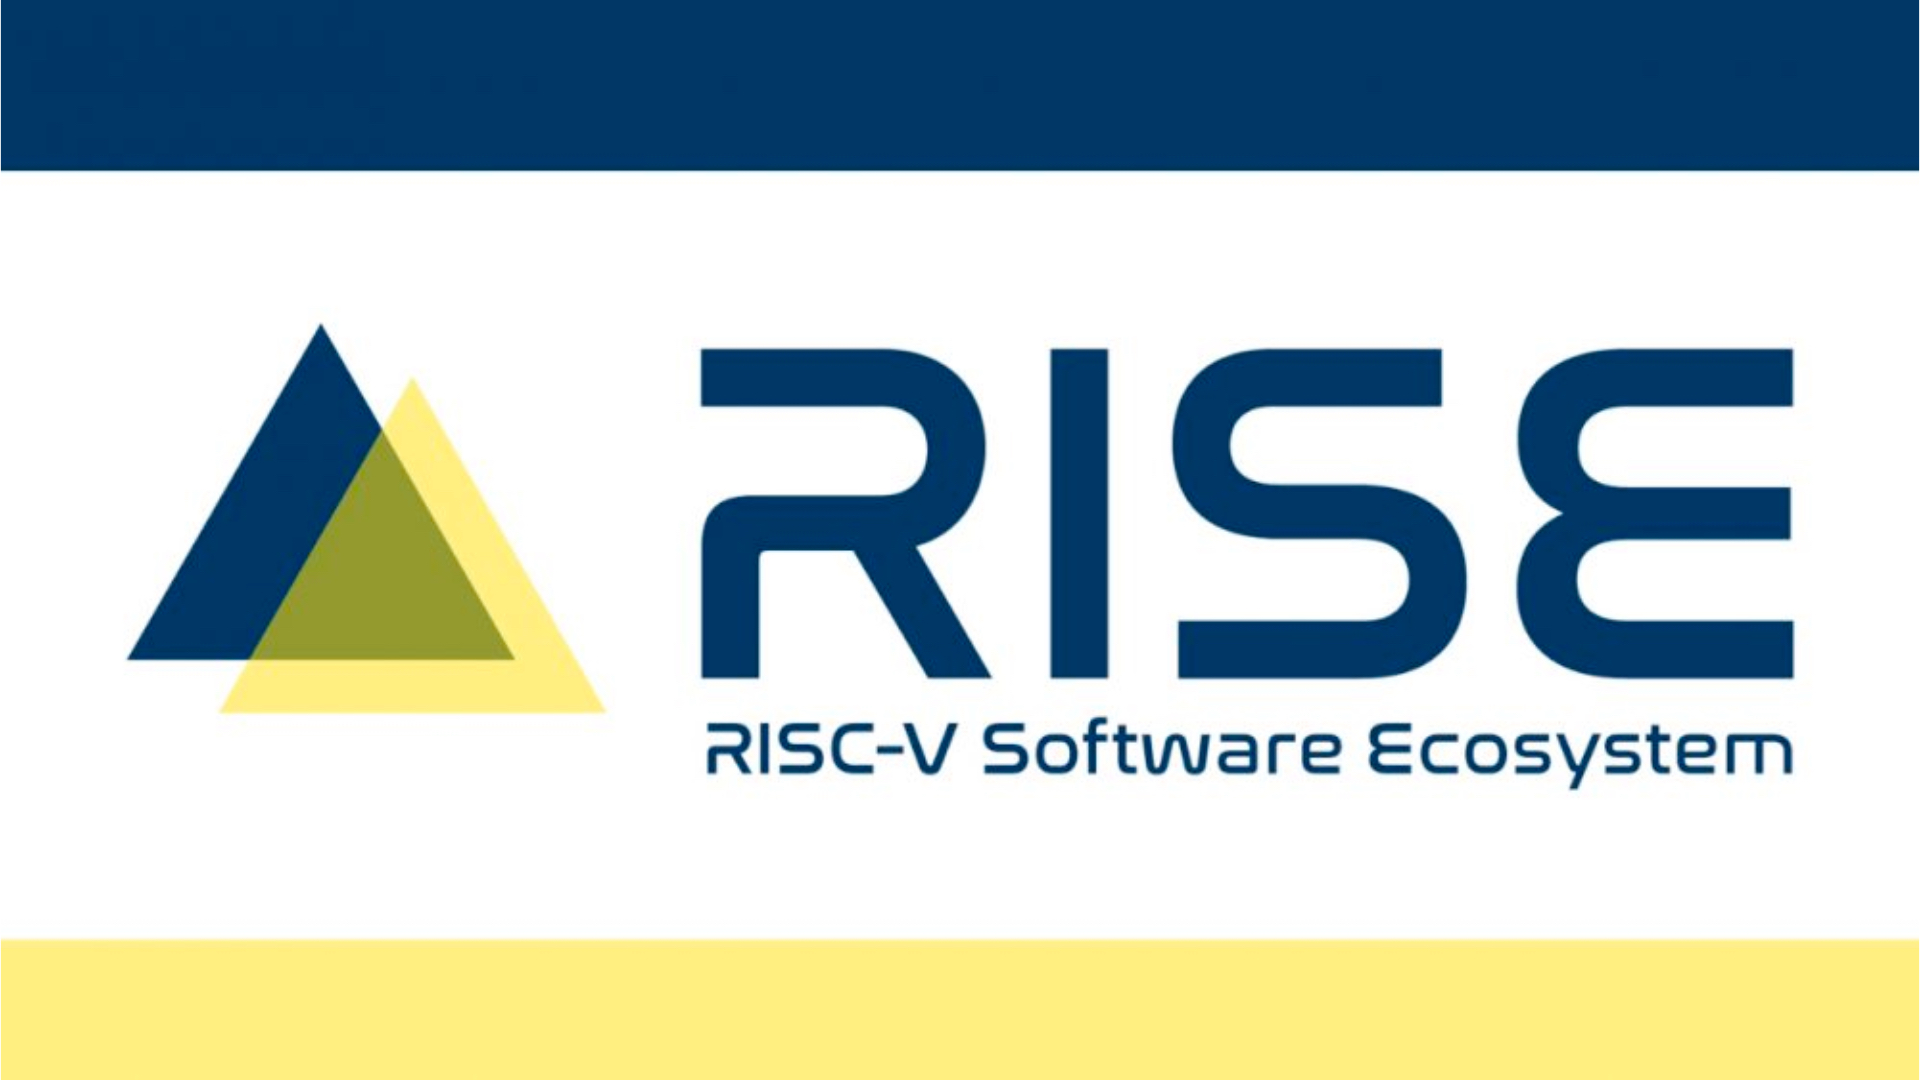 Samsung RISE RISC-V Software Ecosystem